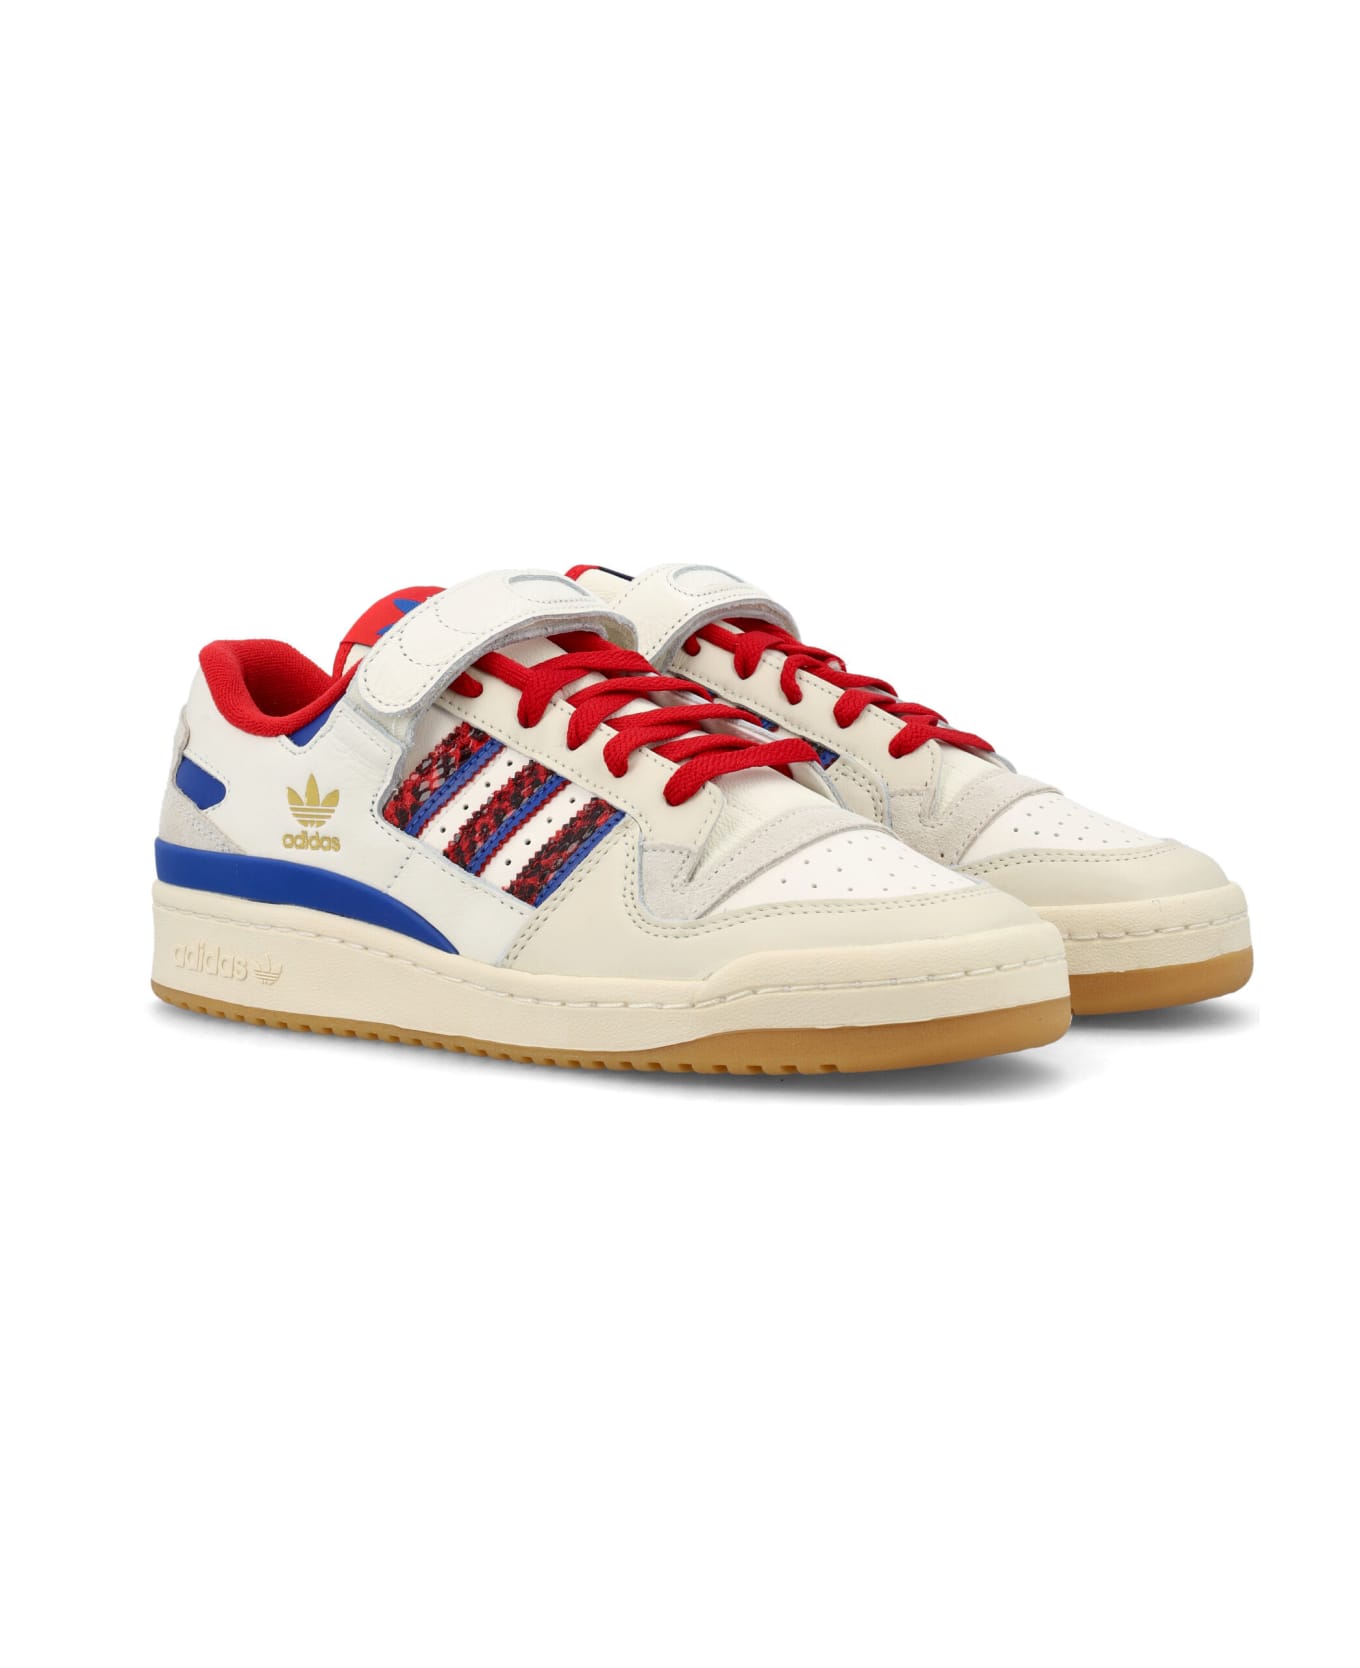 Adidas Originals Forum 84 Low Shoes - WHITE RED スニーカー